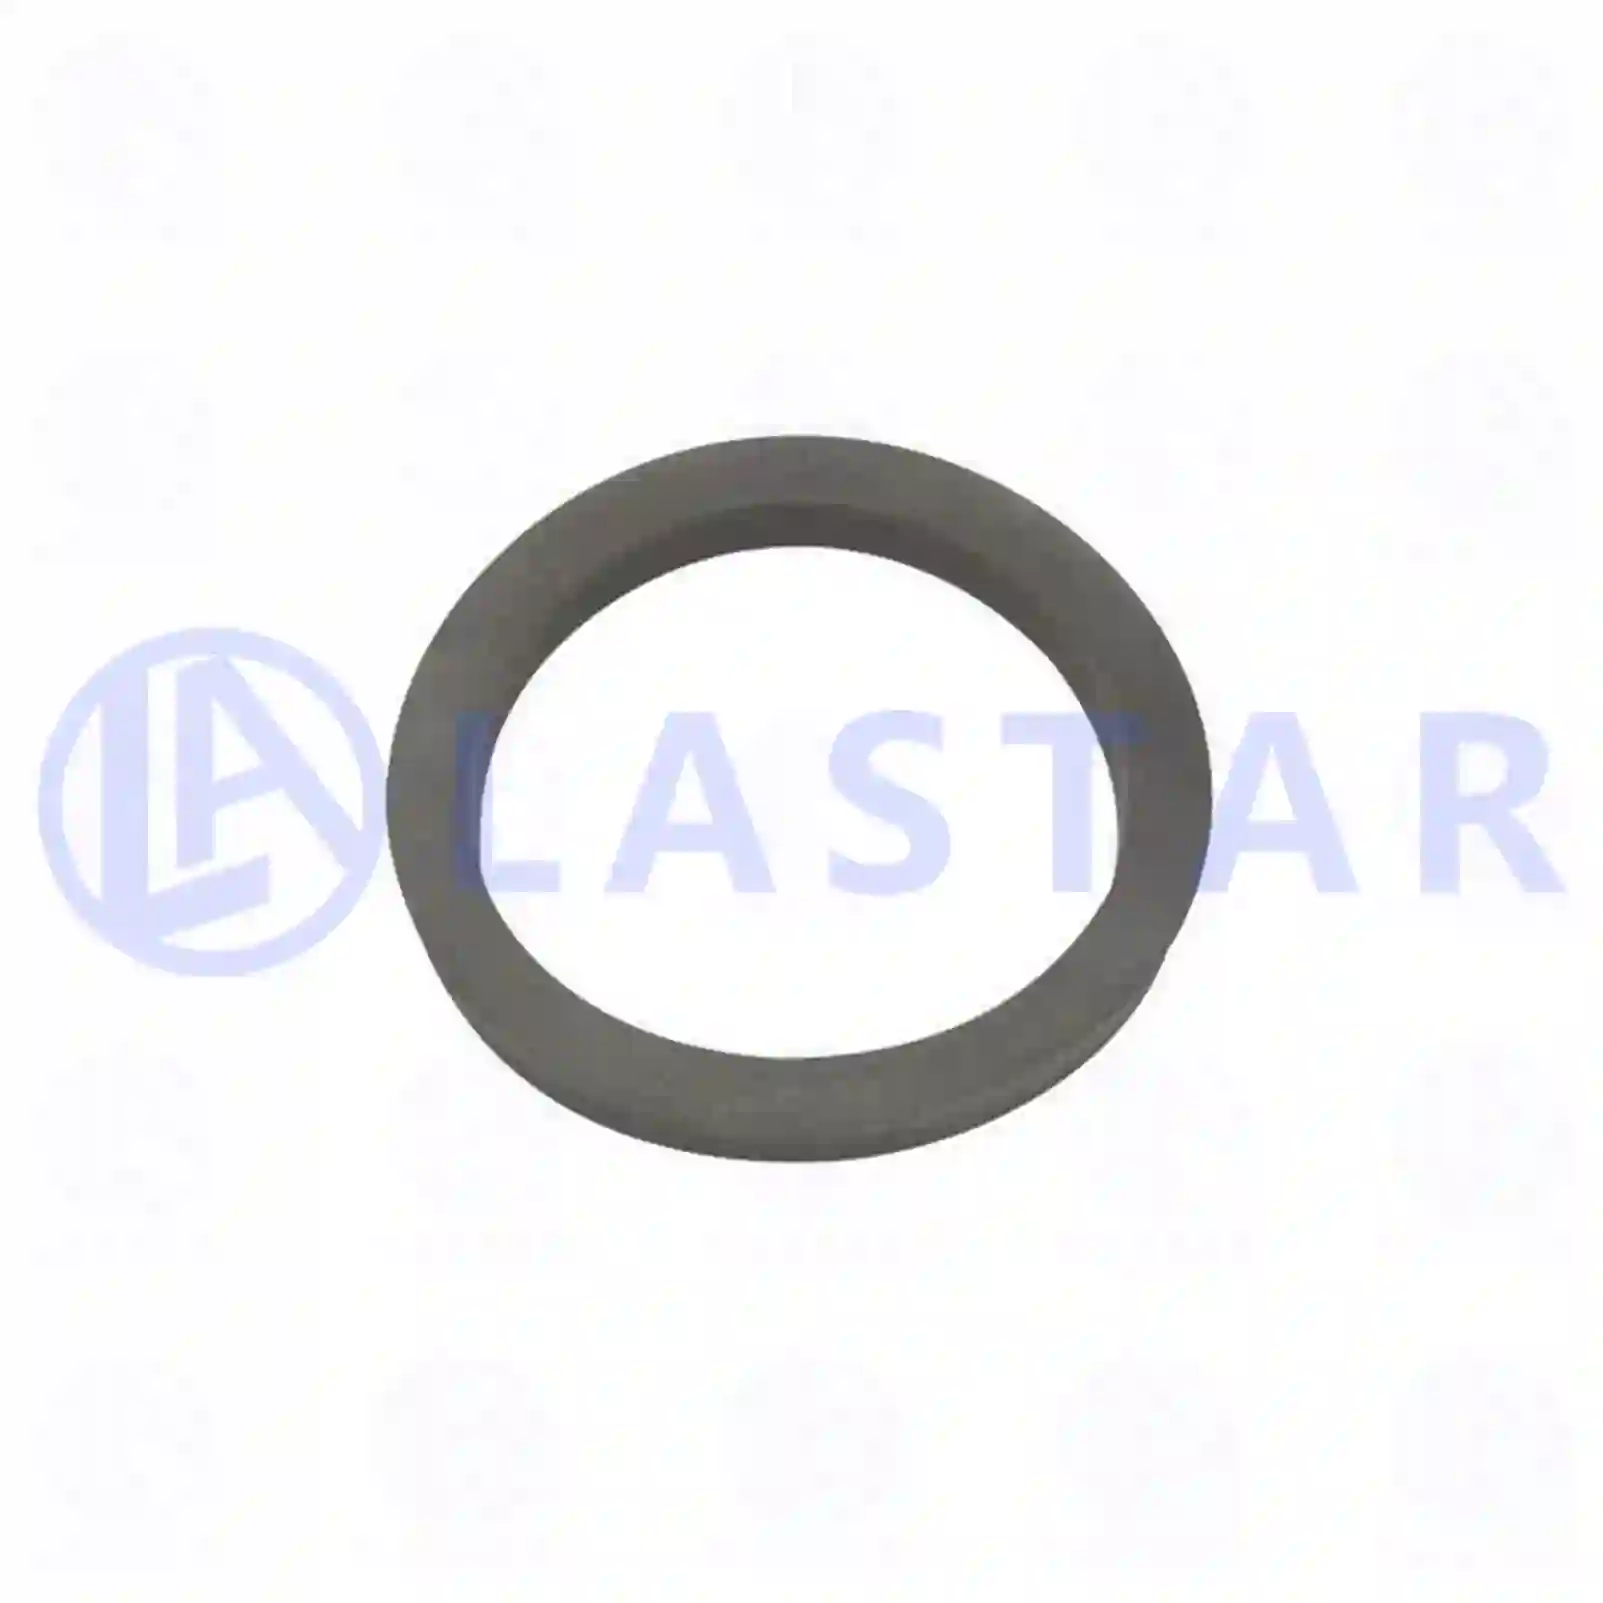 Oil Cooler Seal ring, la no: 77702257 ,  oem no:469483, ZG02002-0008, Lastar Spare Part | Truck Spare Parts, Auotomotive Spare Parts